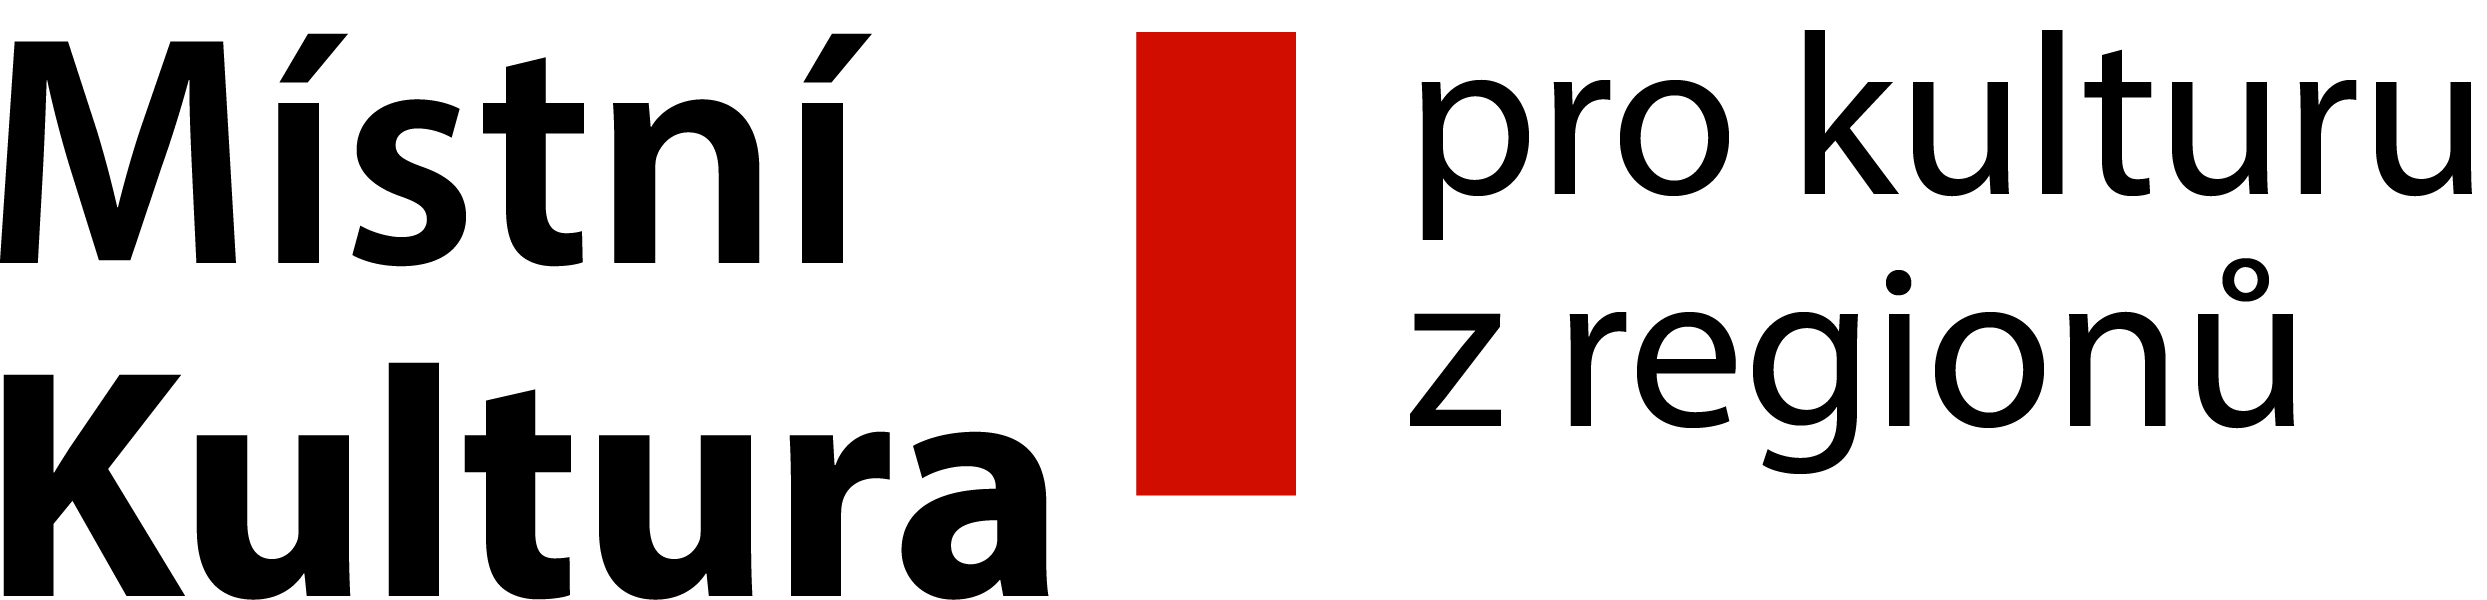 logo-2.png (42 KB)